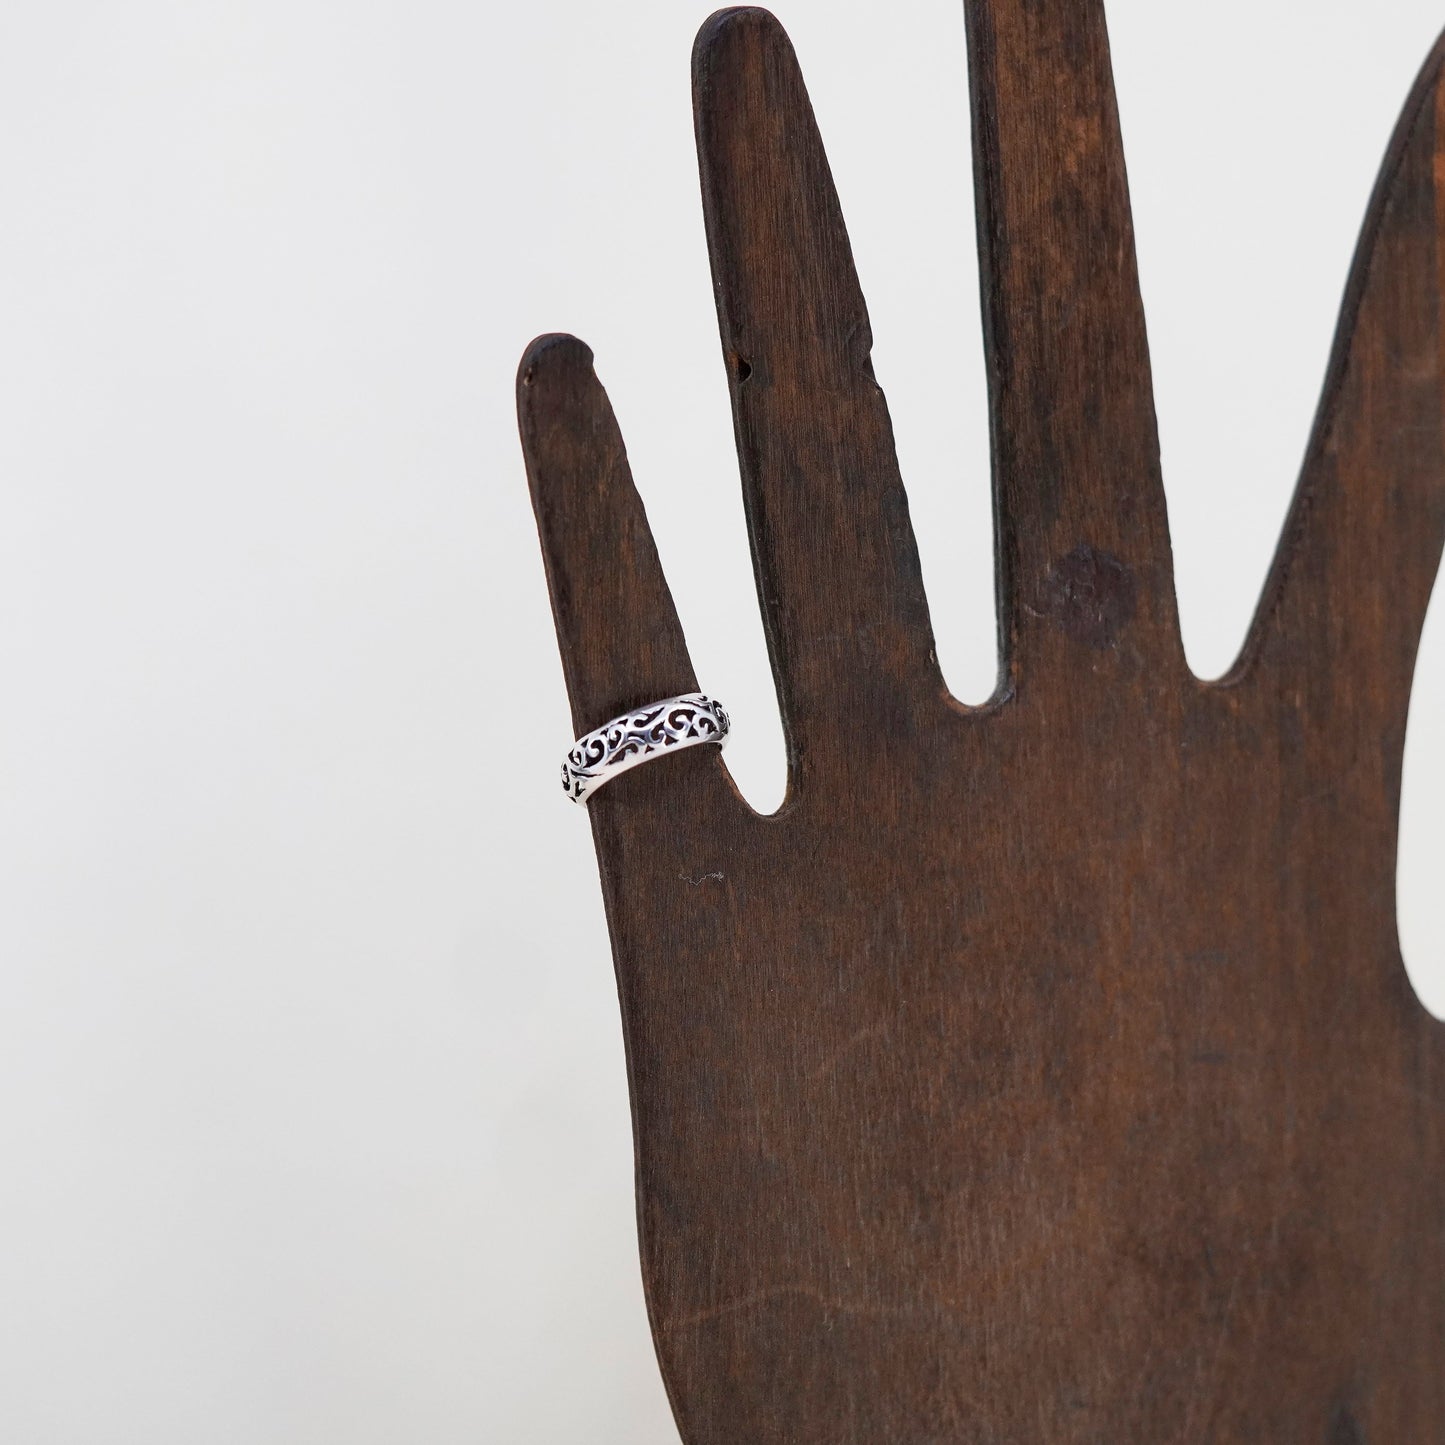 Size 1.75, vintage Sterling silver handmade ring, 925 filigree swirl band